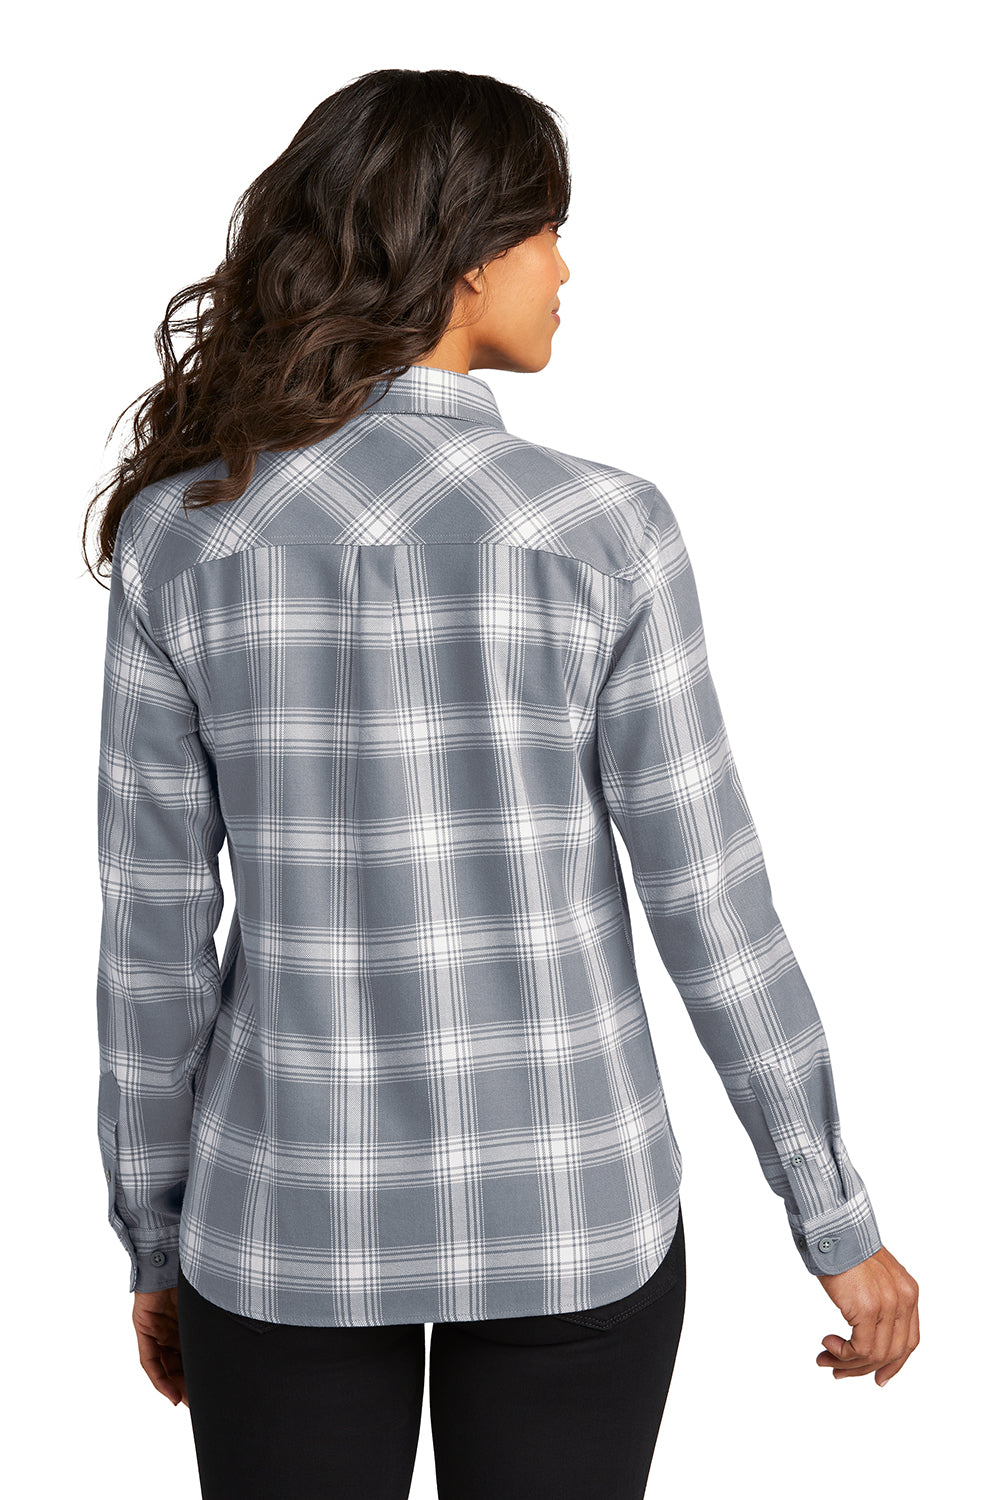 Port Authority LW669 Womens Plaid Flannel Long Sleeve Button Down Shirt Grey/Cream Plaid Back